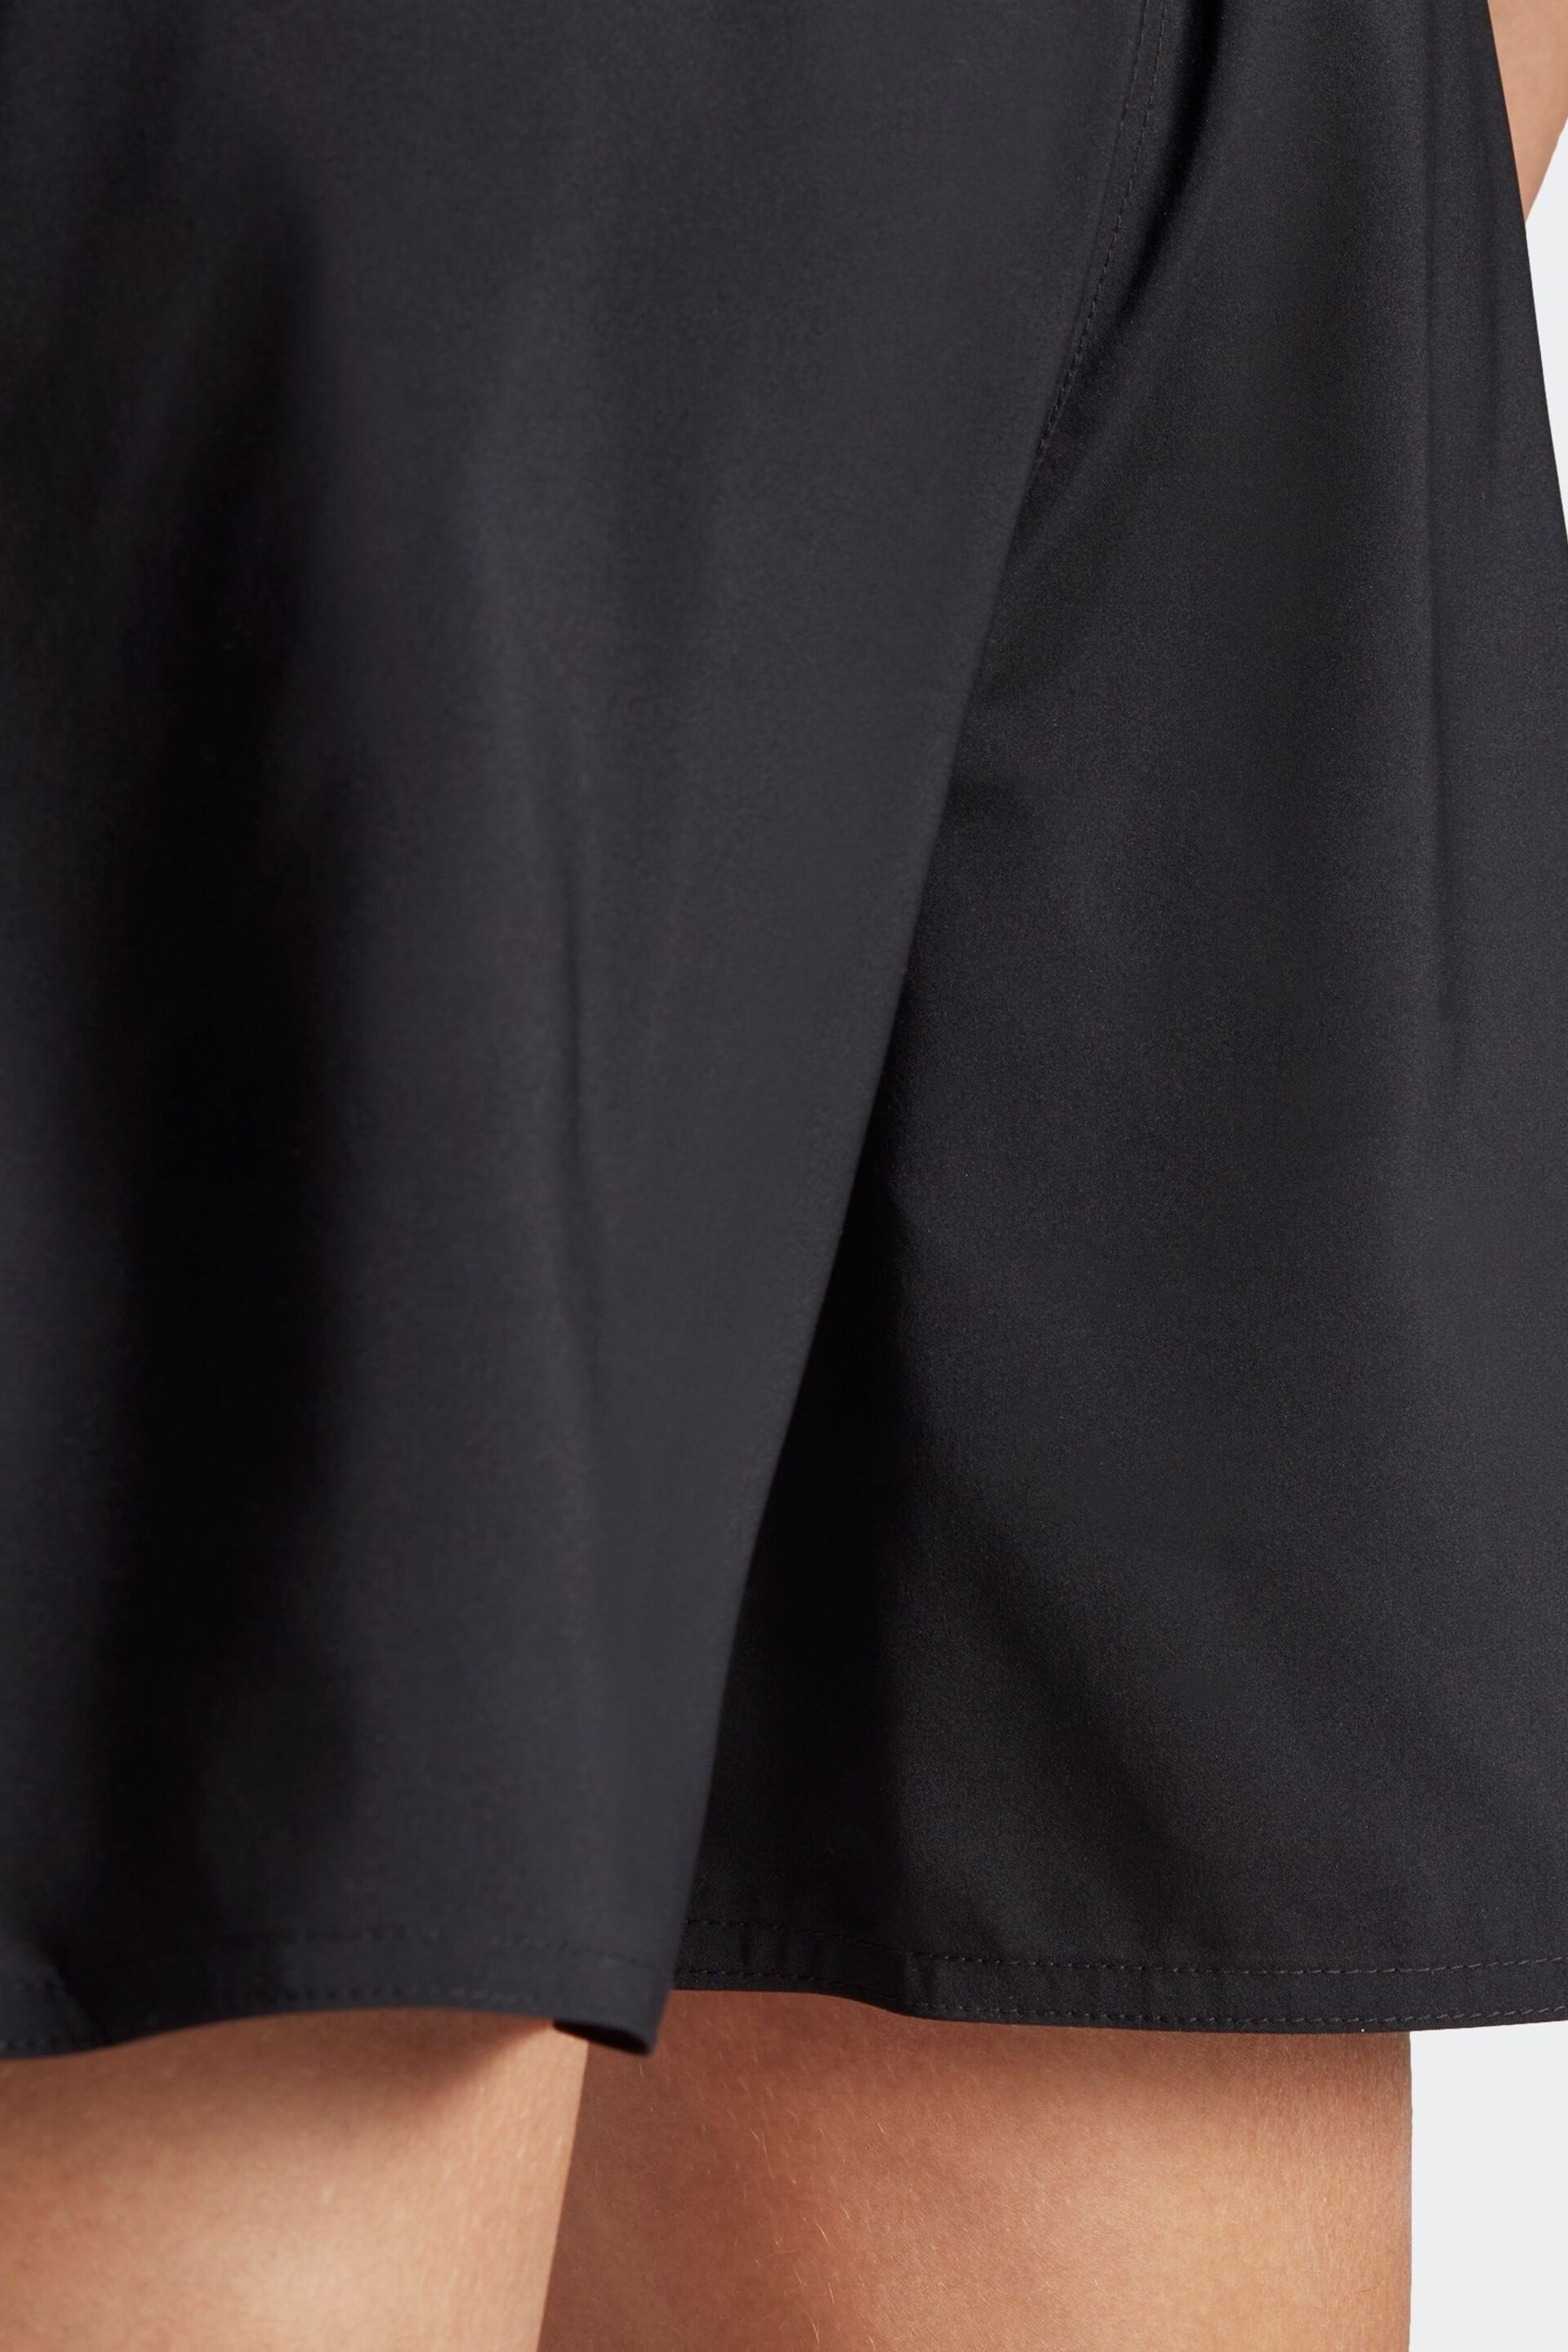 adidas Dark Black Solid CLX Short Length Swim Shorts - Image 7 of 9